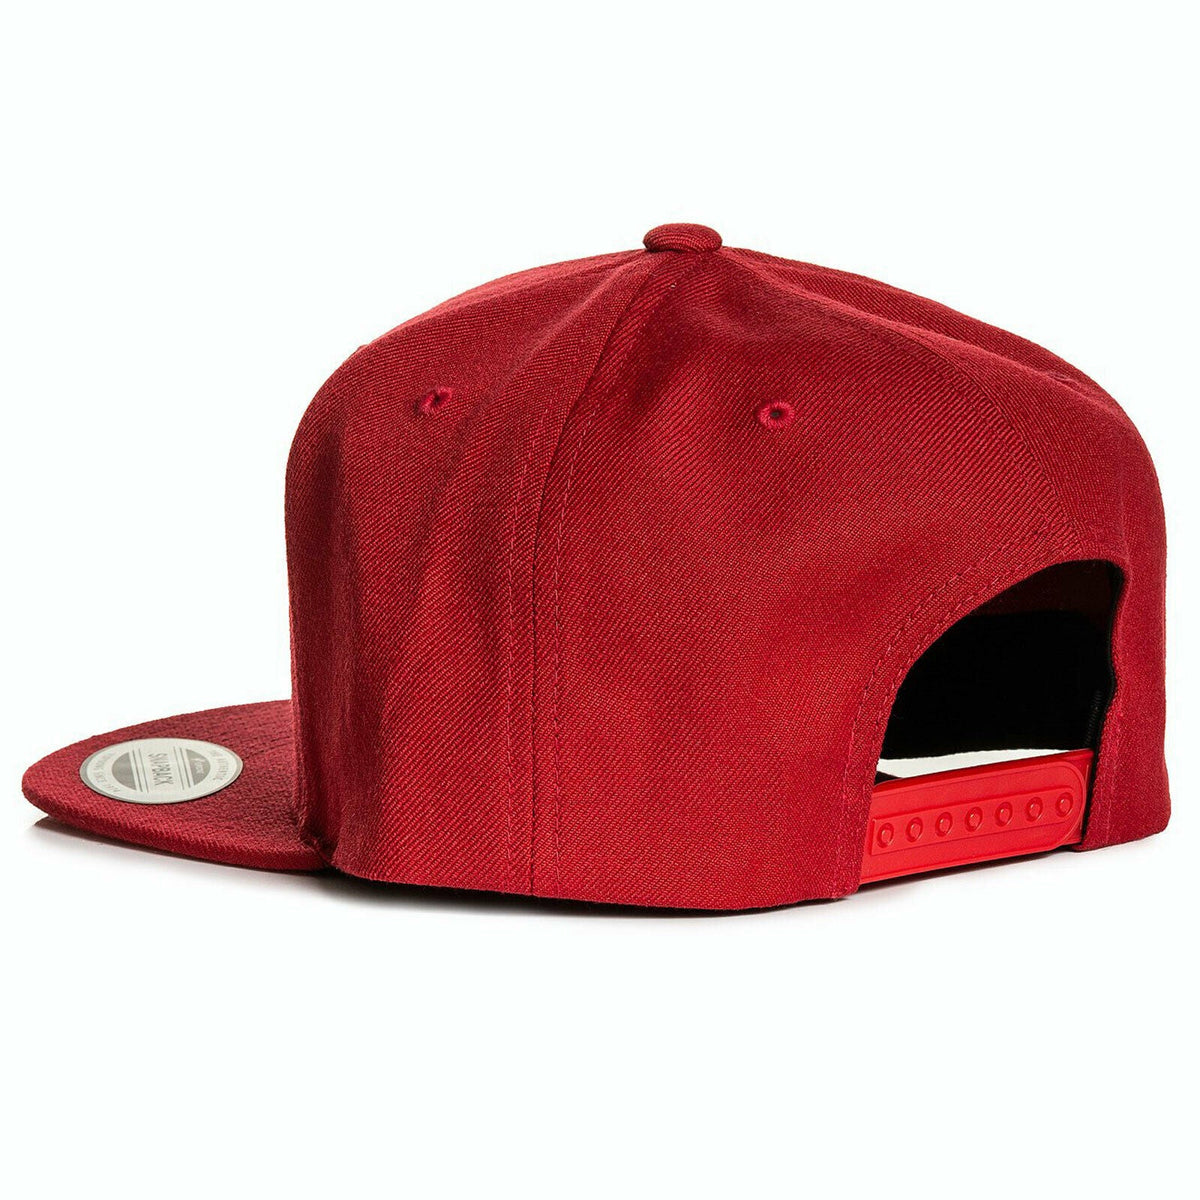 Hallmark Red Snapback Cap-Mens Beanies, Hats &amp; Snapback Caps-Scarlett Dawn